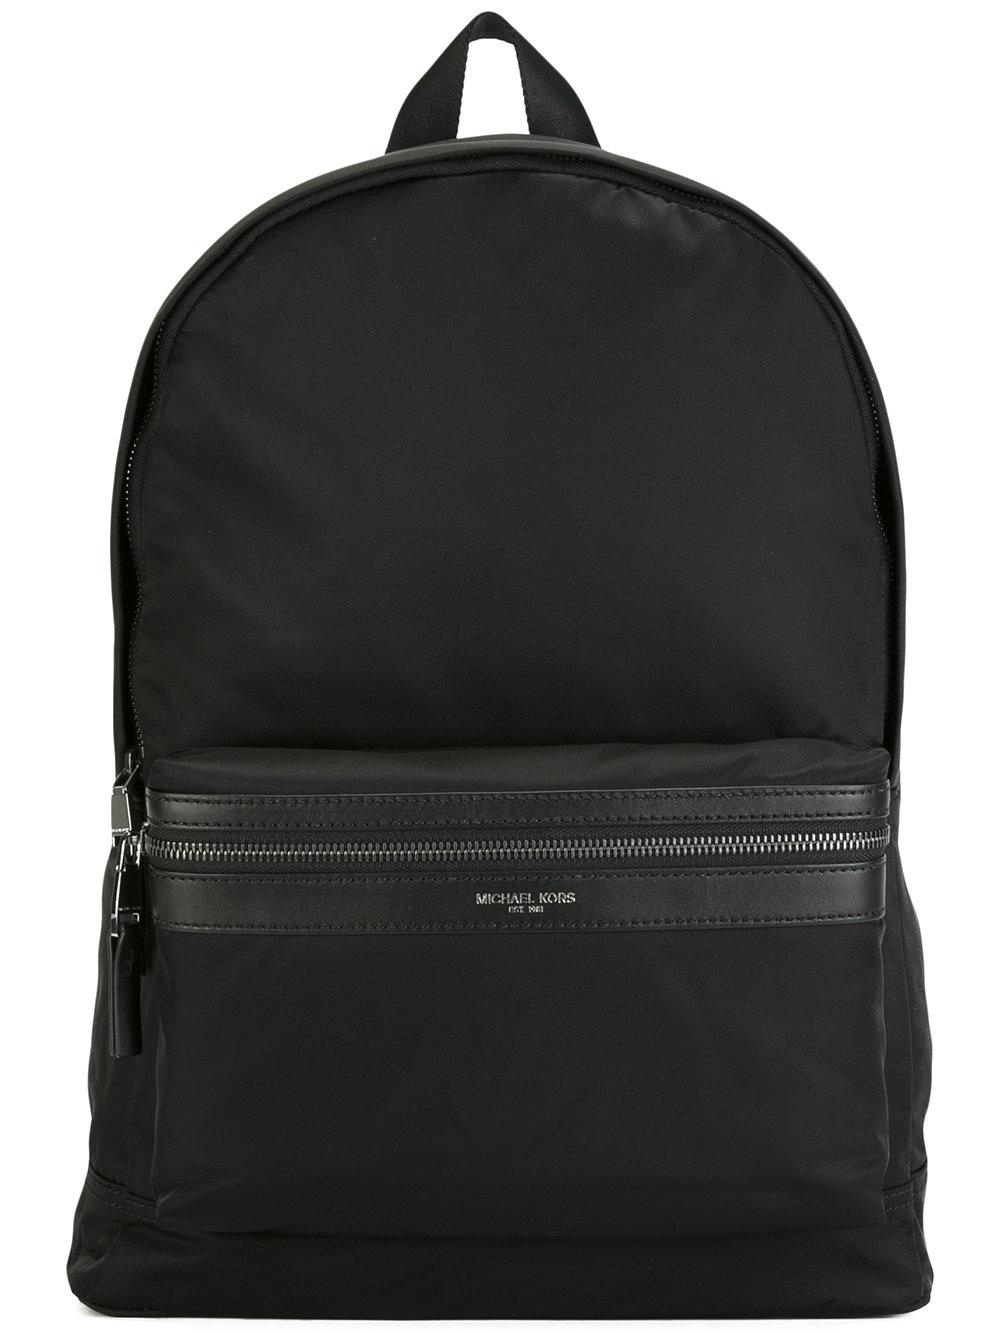 Michael Kors Leather 'kent' Backpack in Black for Men - Lyst